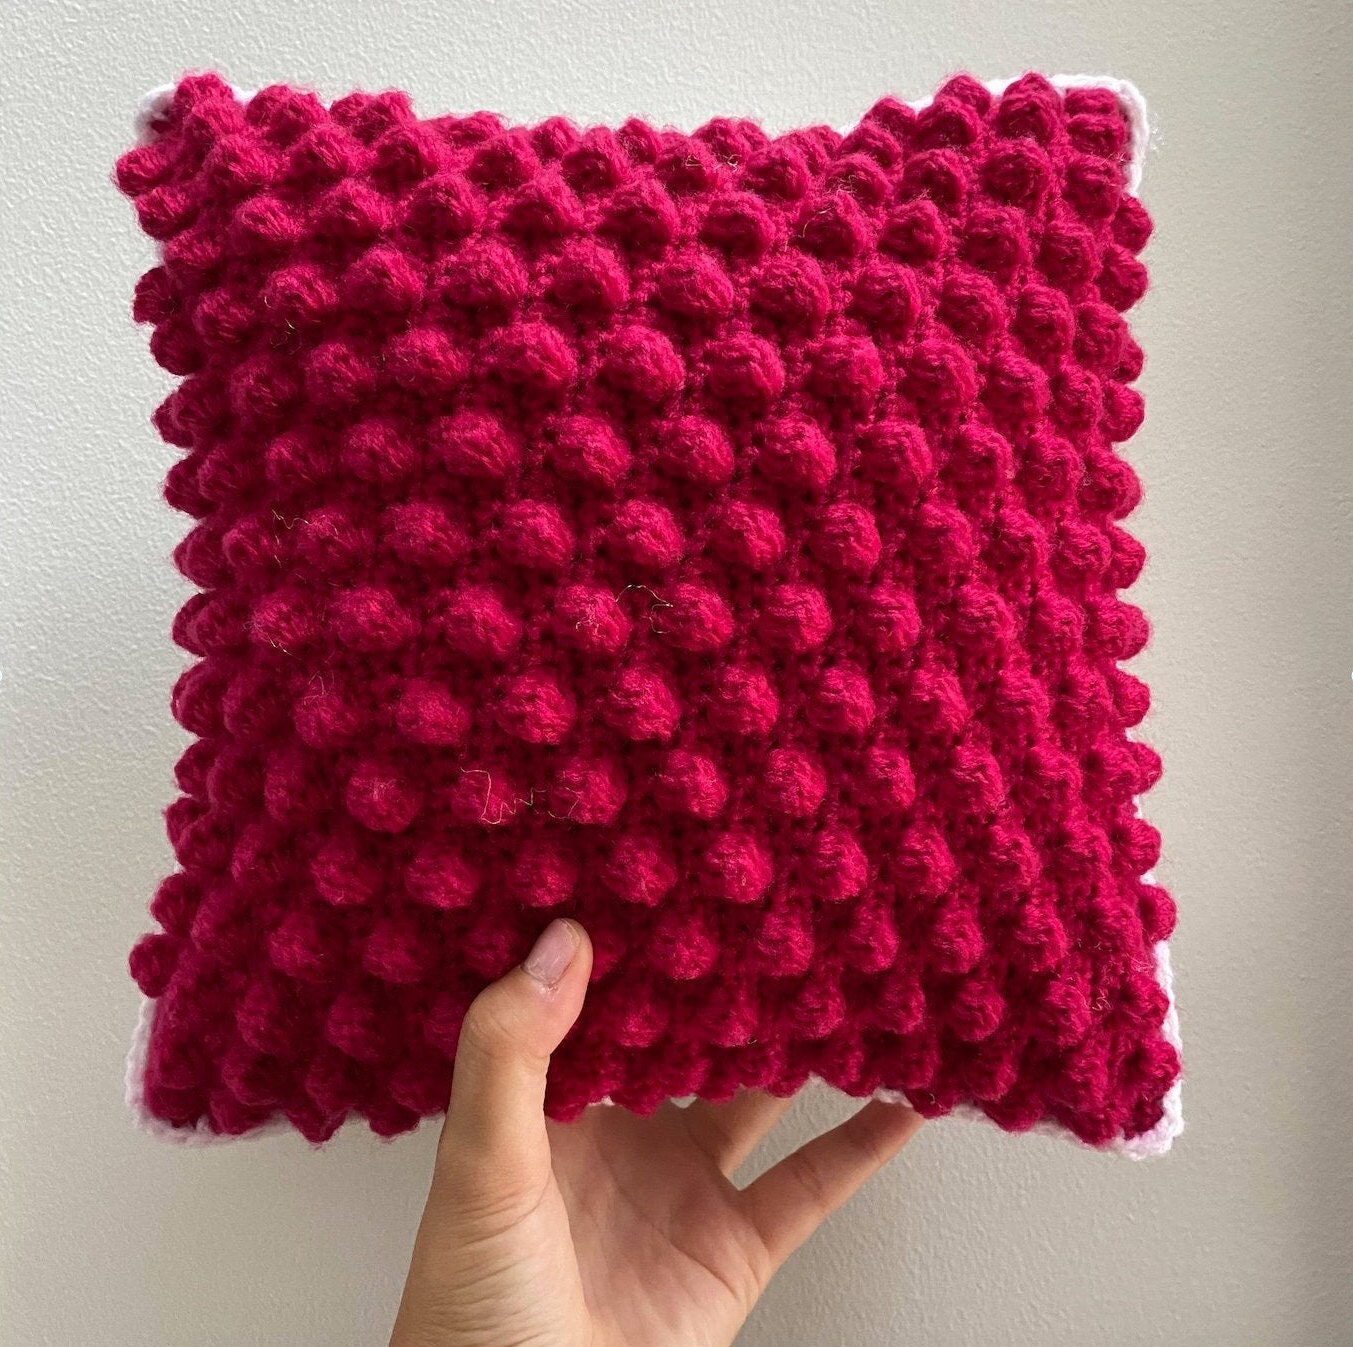 Raspberry Fez Cushion (small)